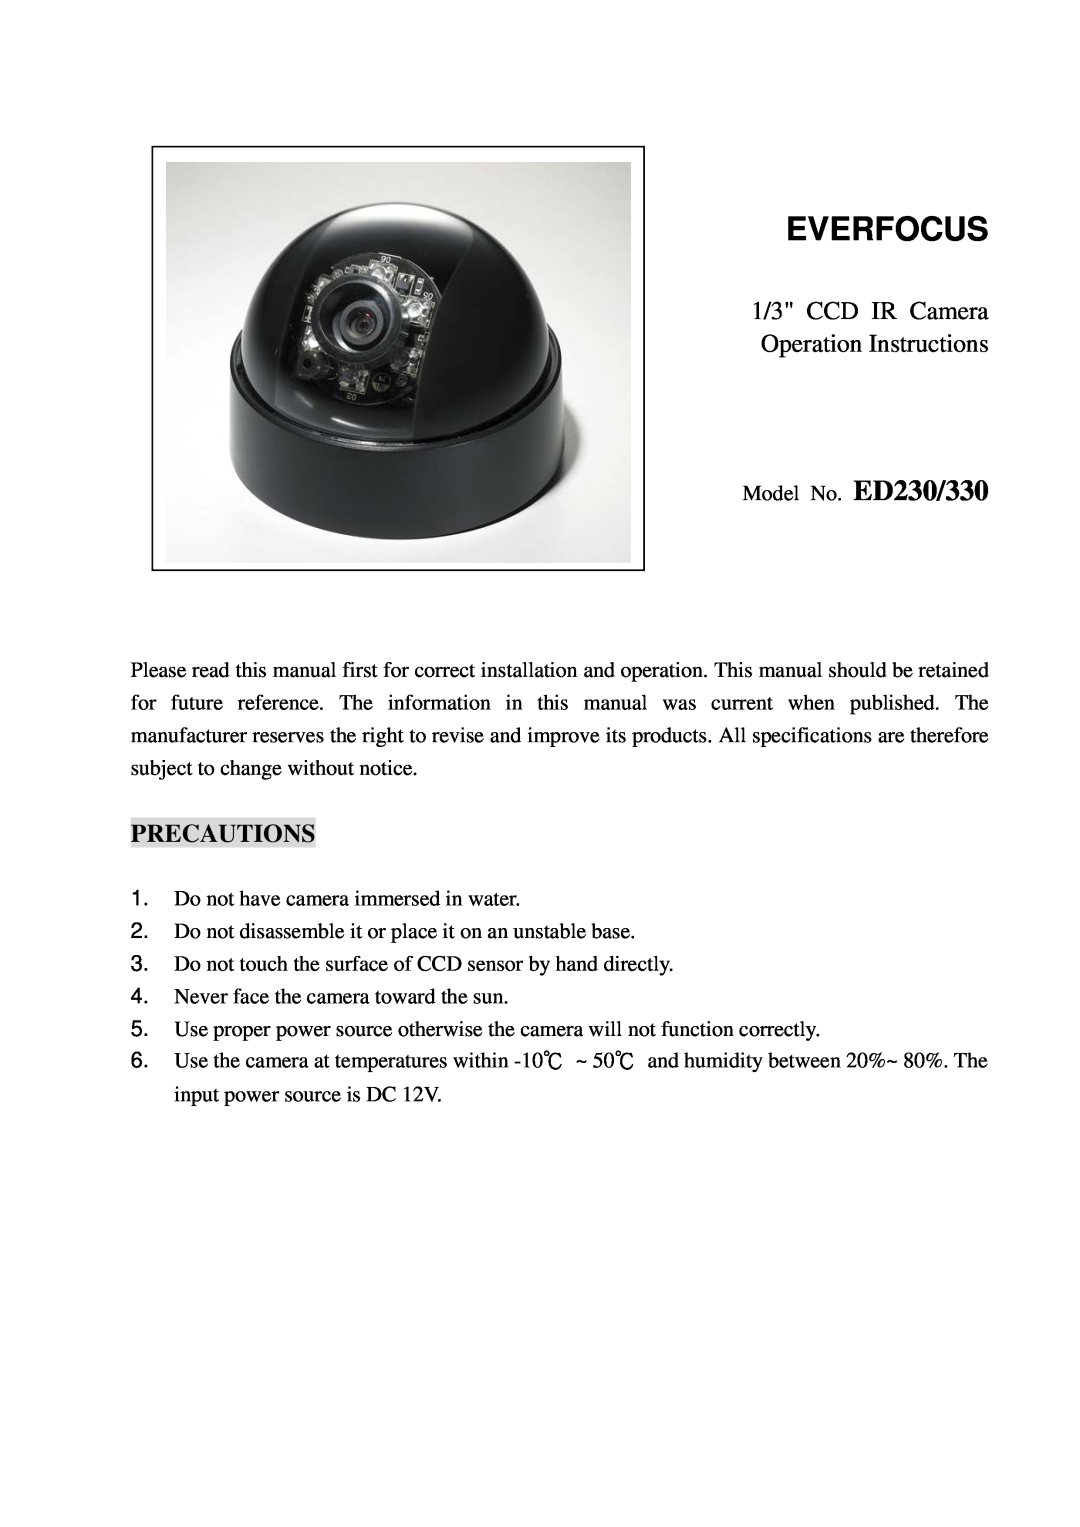 EverFocus ED230, ED330 specifications 1/3 CCD IR Camera Operation Instructions, Precautions, Everfocus 